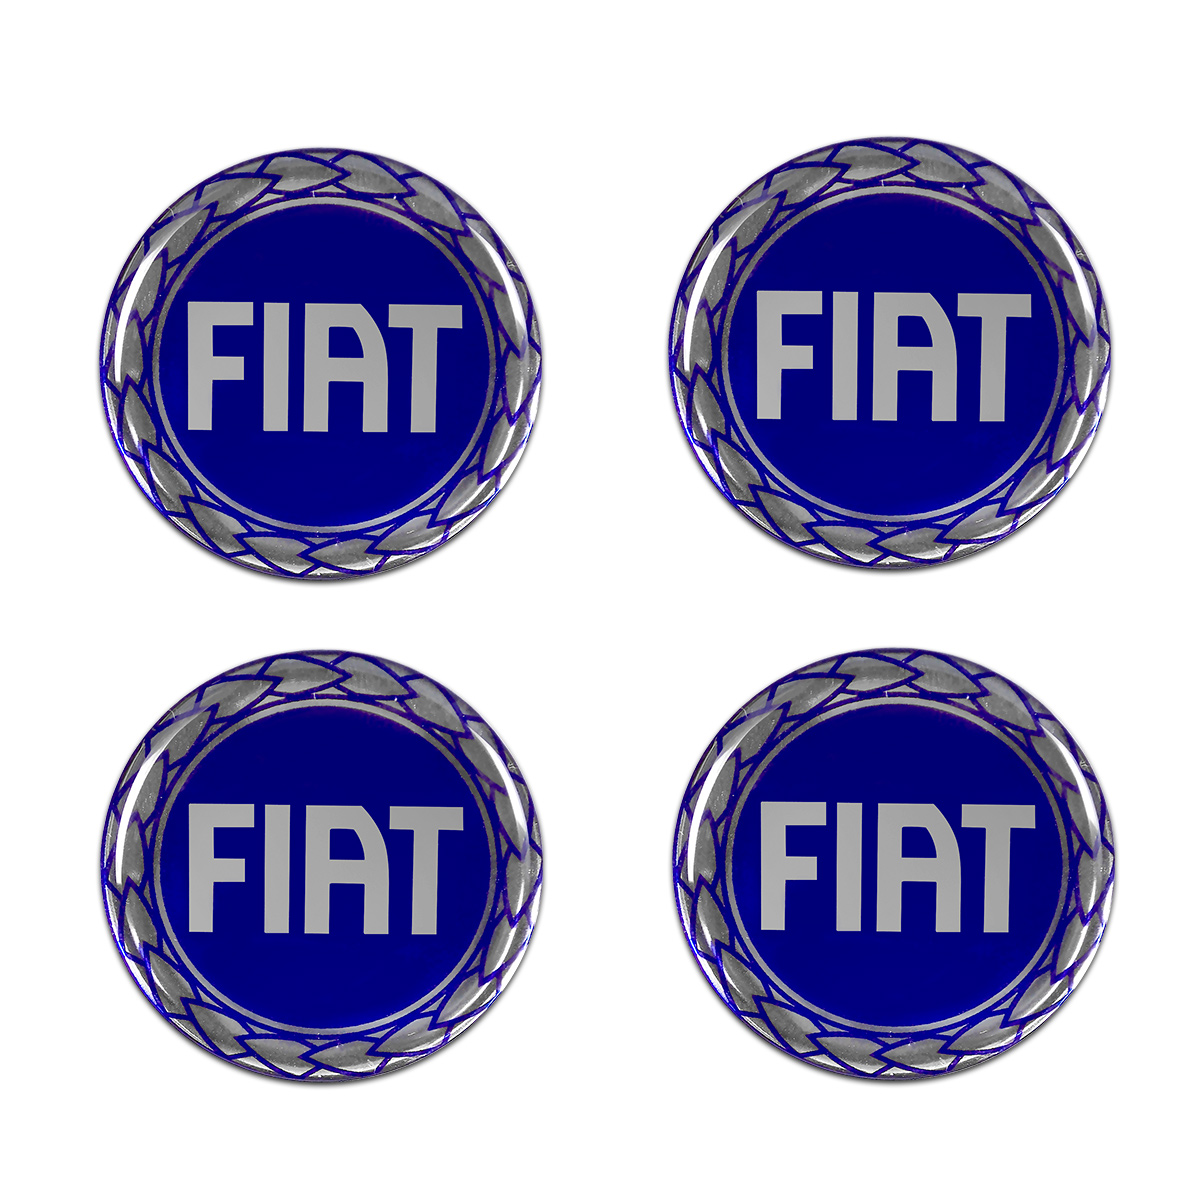 Emblema Adesivo Roda Esport Calota Resinado 48mm Fiat Mod 01